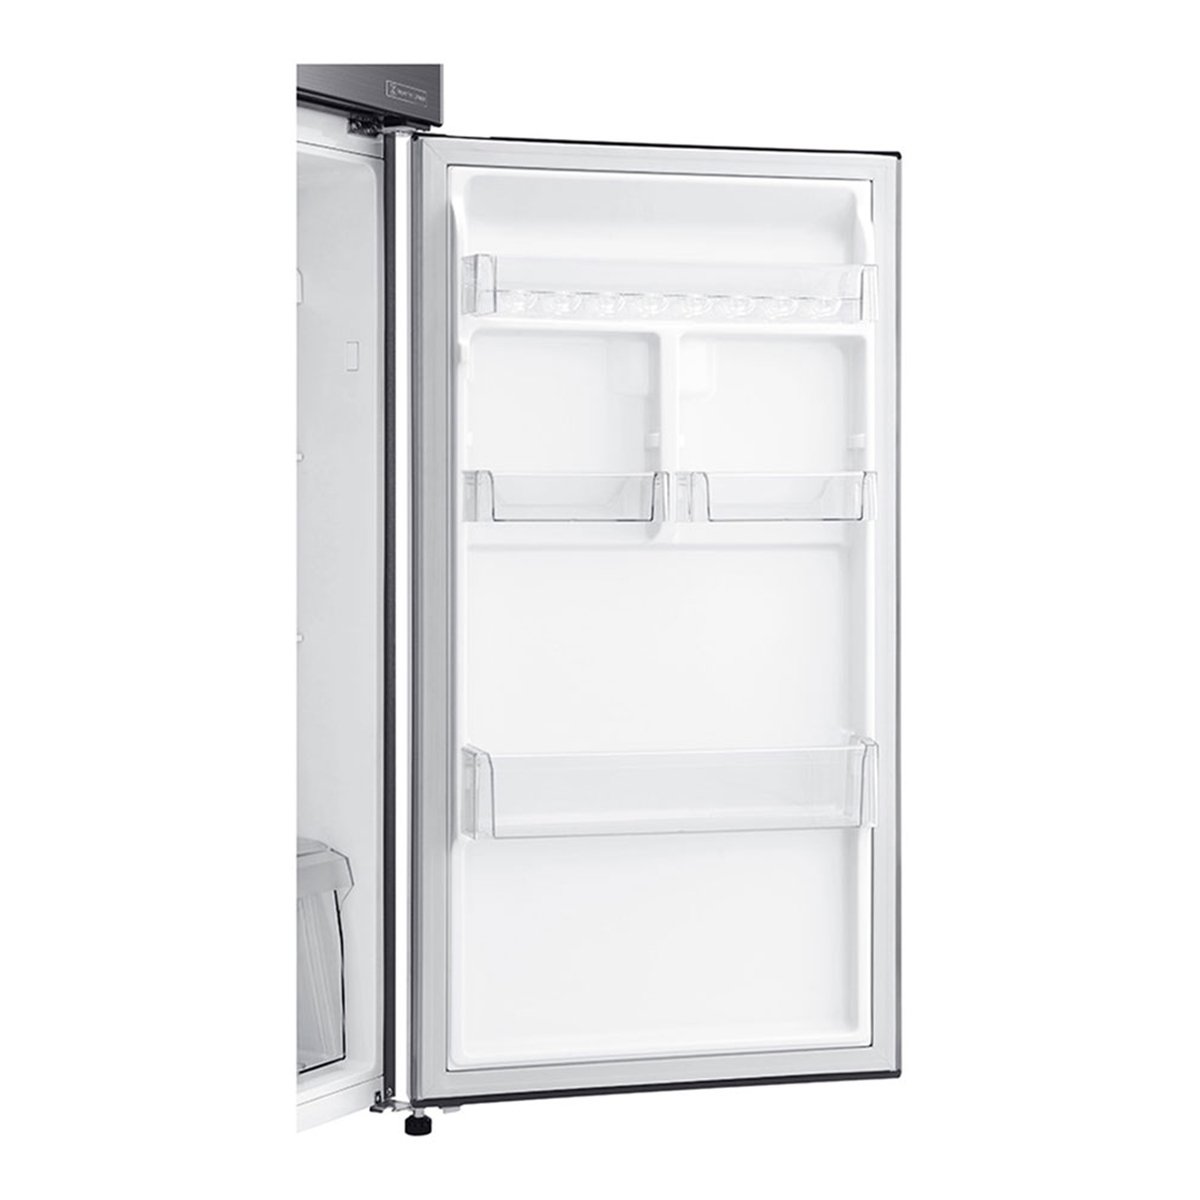 LG Double Door Refrigerator GN-B402SQCB 333Ltr, Multi Air Flow, Pull-out Tray, Big Size Veggie Box